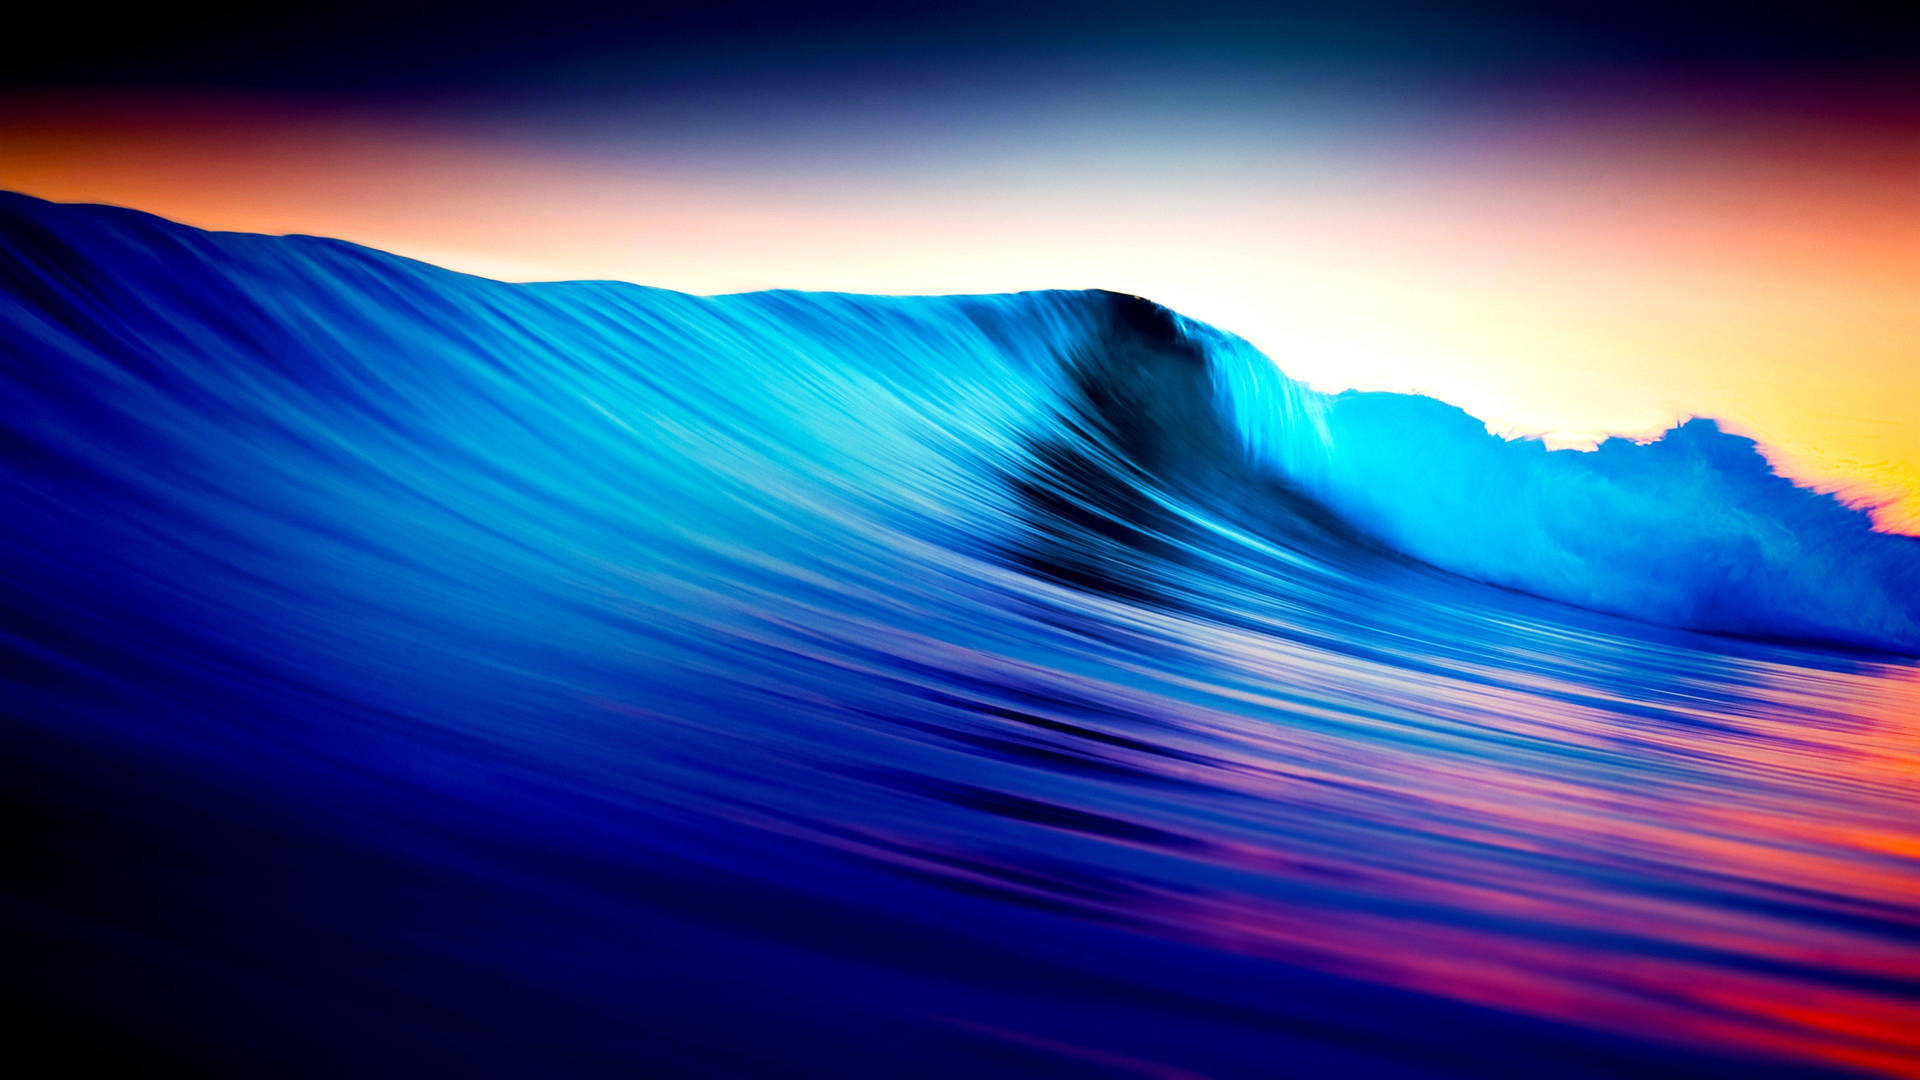 Neon Blue Aesthetic Waves Wallpaper